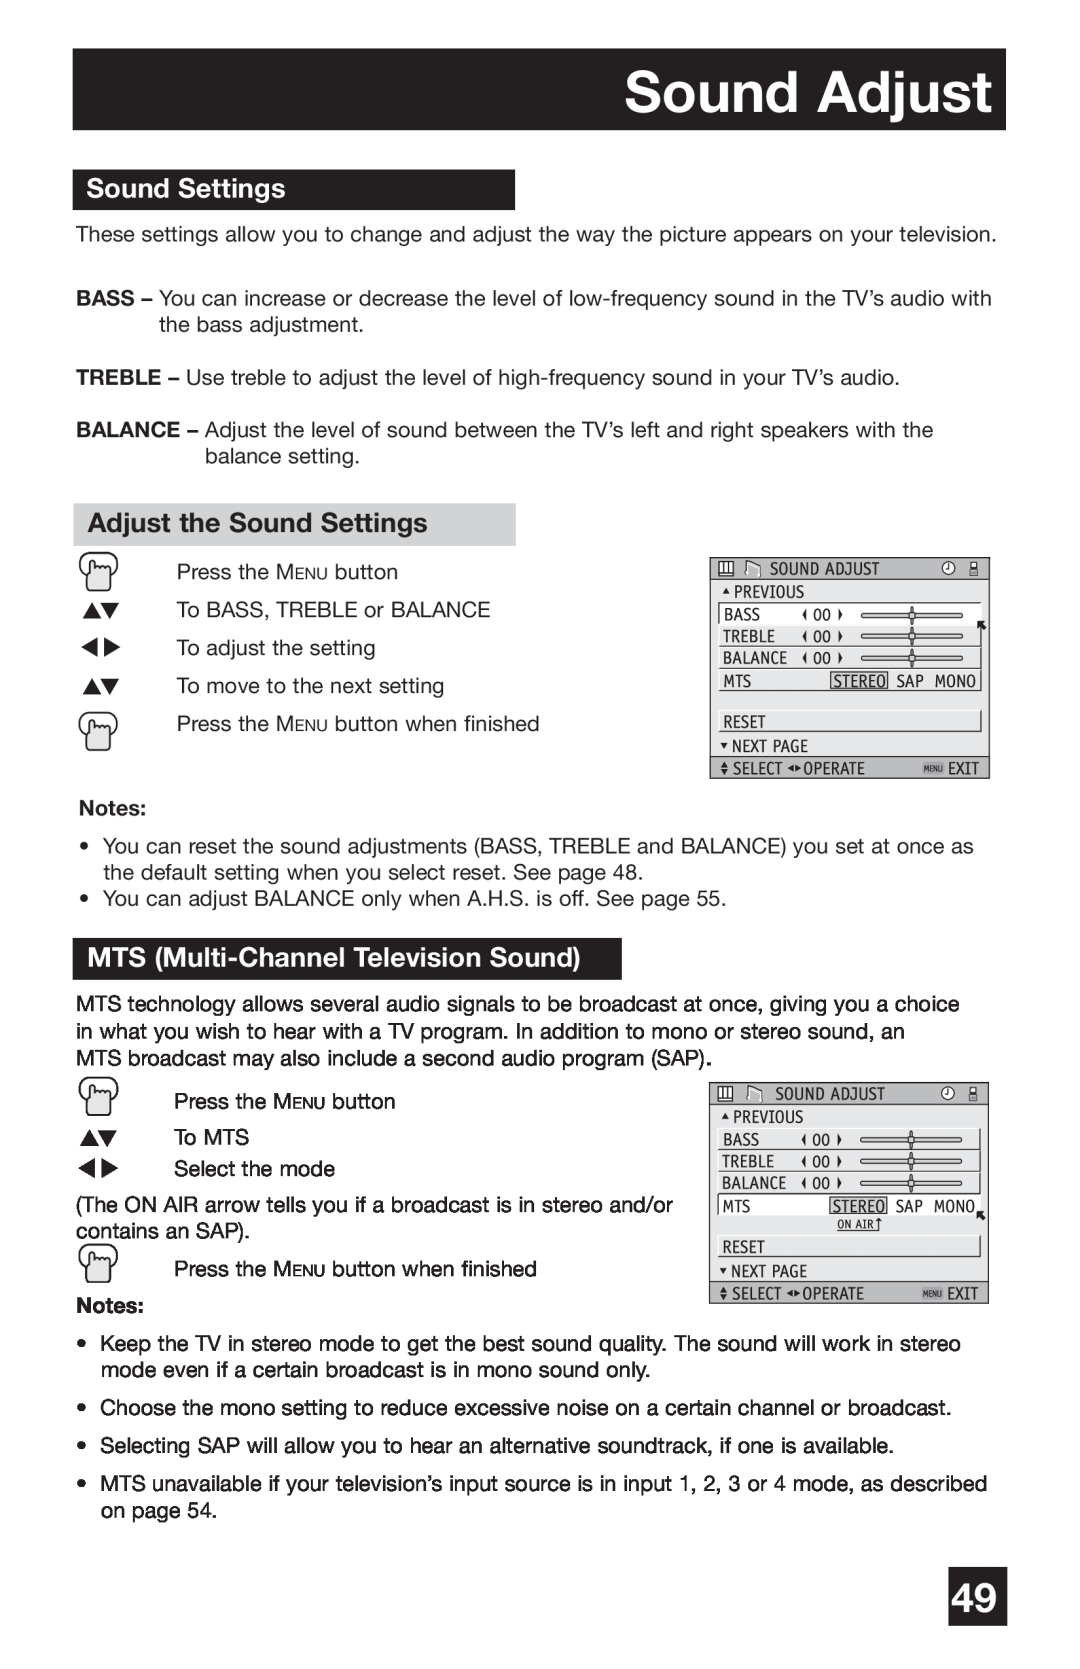 JVC PD-42WV74 manual Sound Adjust, Adjust the Sound Settings, MTS Multi-Channel Television Sound 